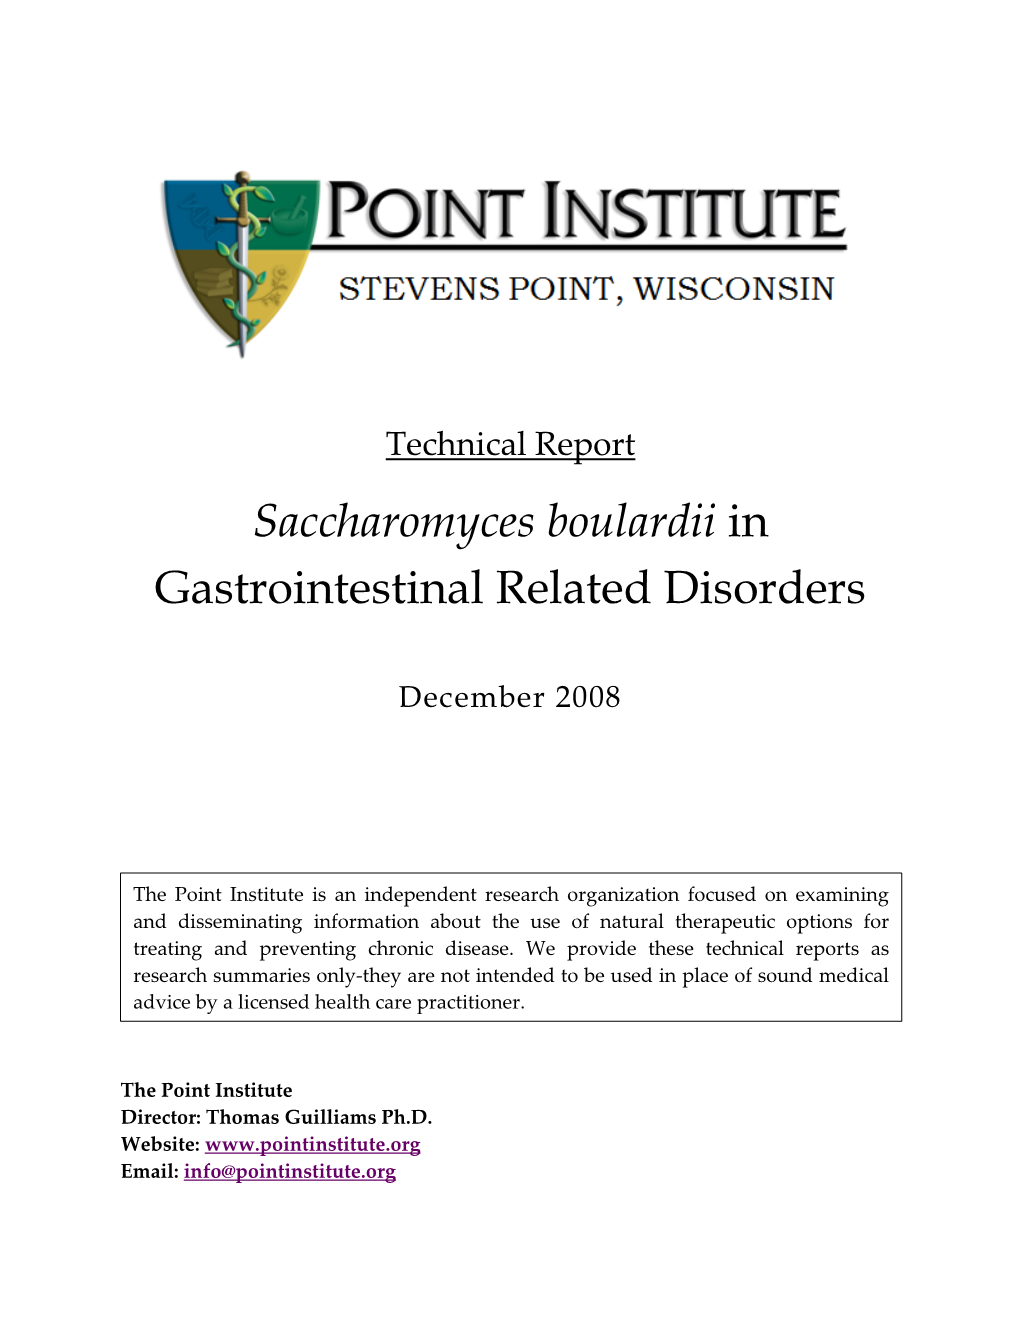 Saccharomyces Boulardii in Gastrointestinal Related Disorders